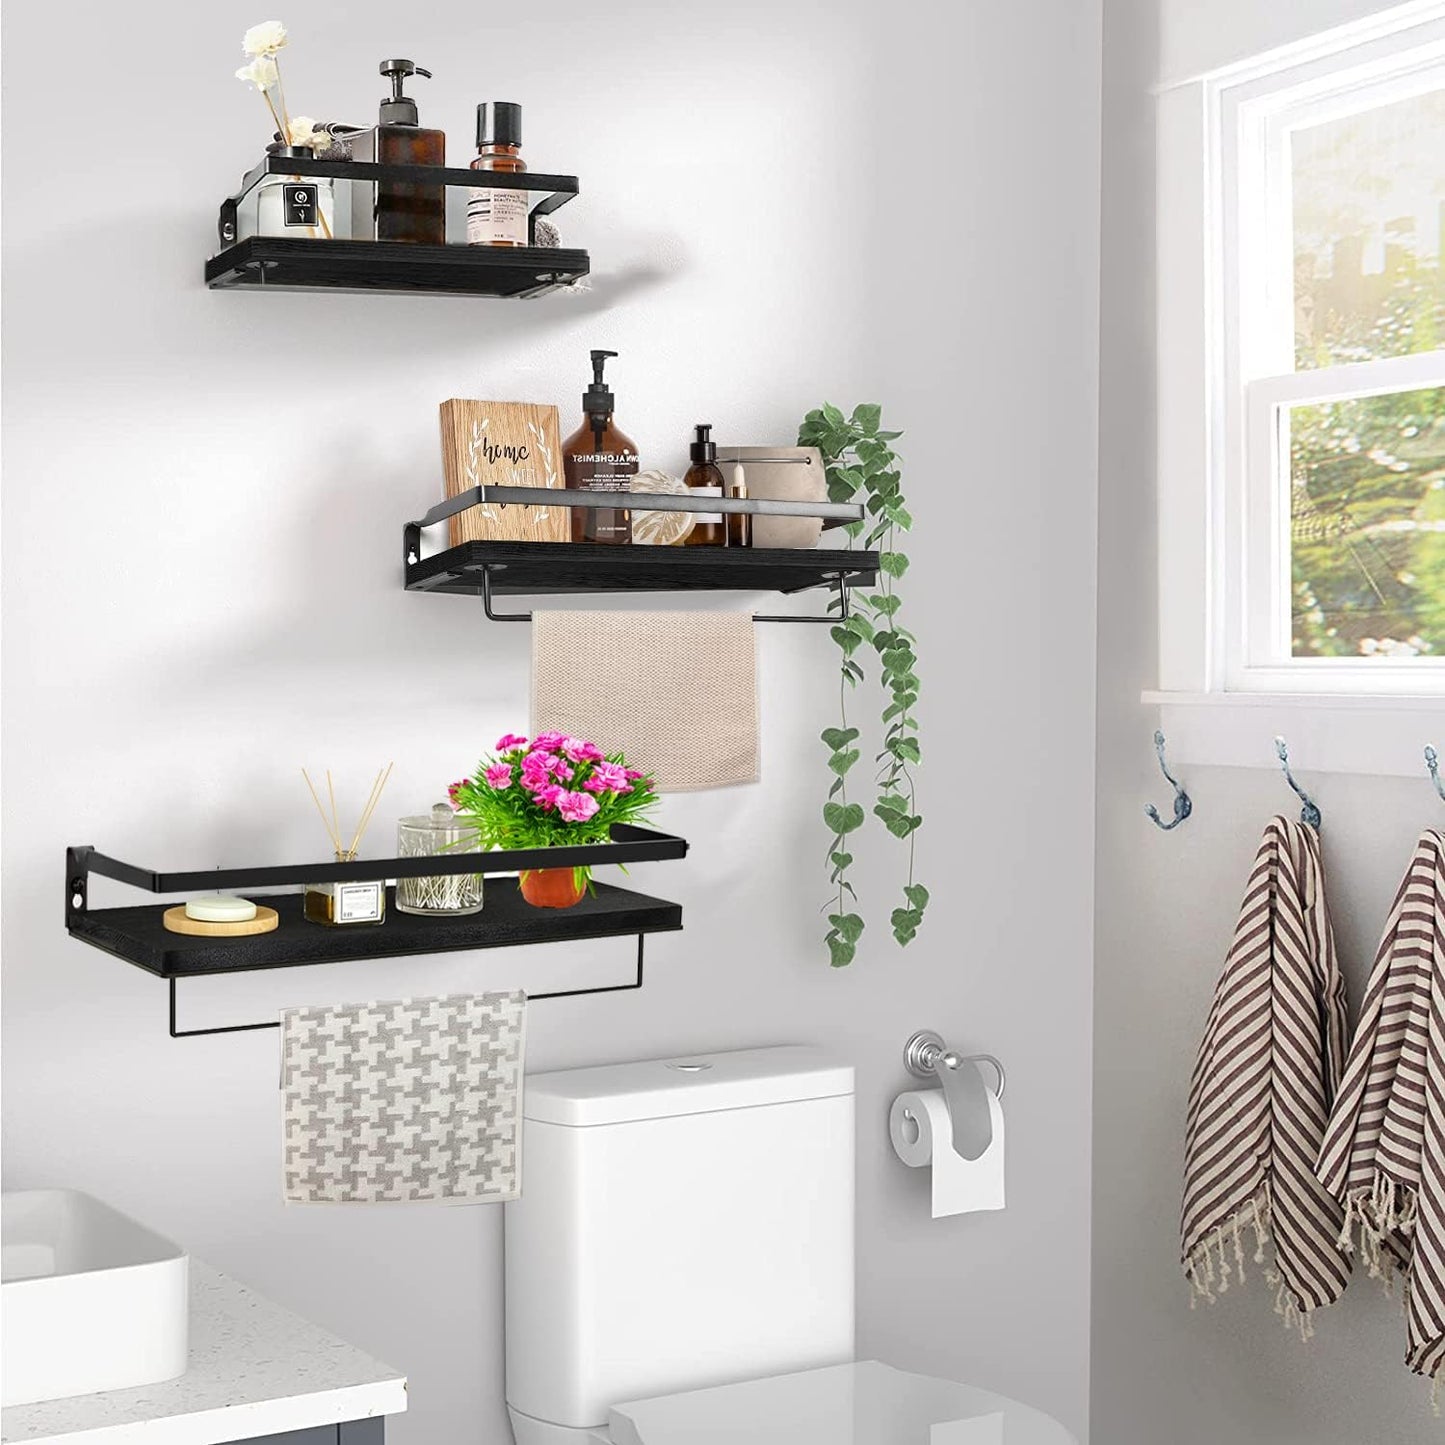 Wall Mounted Floating Shelves | Wall Shelves Set of 3 | Decorative Wood Storage Shelves for Kitchen, Bedroom, Living Room and Washroom